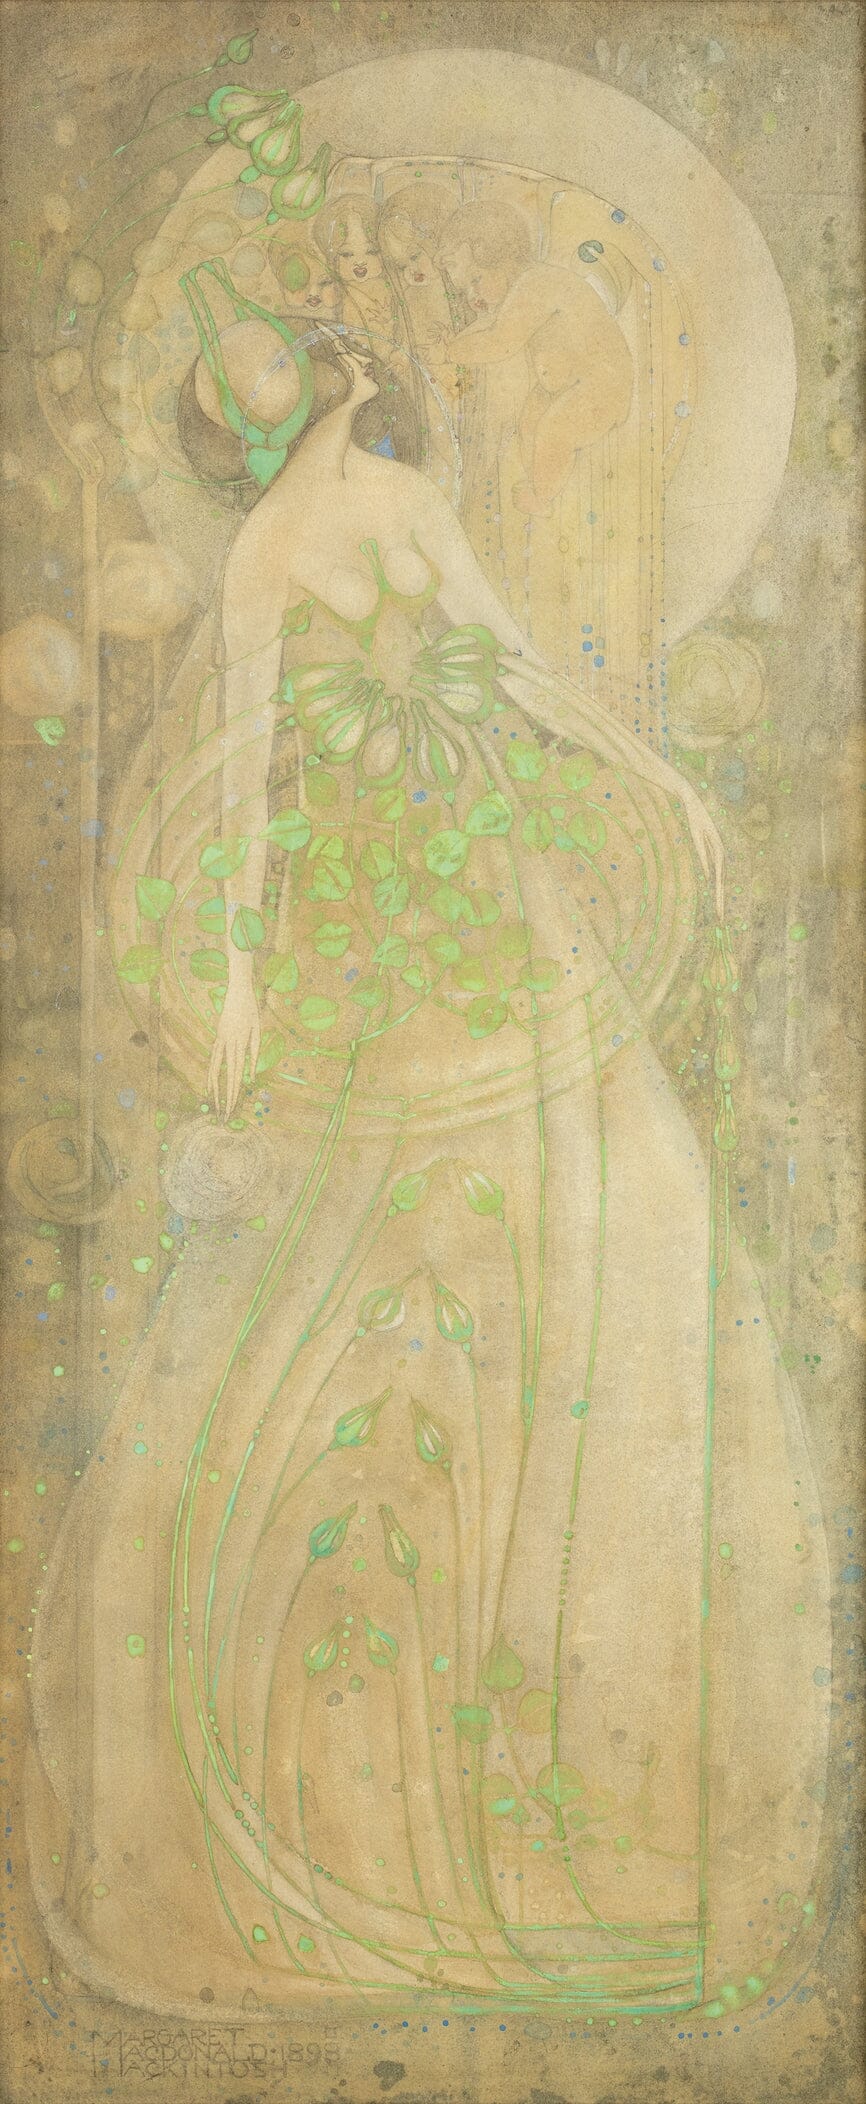 Junirosen (June roses) (1900) Margaret Macdonald-Mackintosh art print  The Trumpet Shop Vintage Prints   